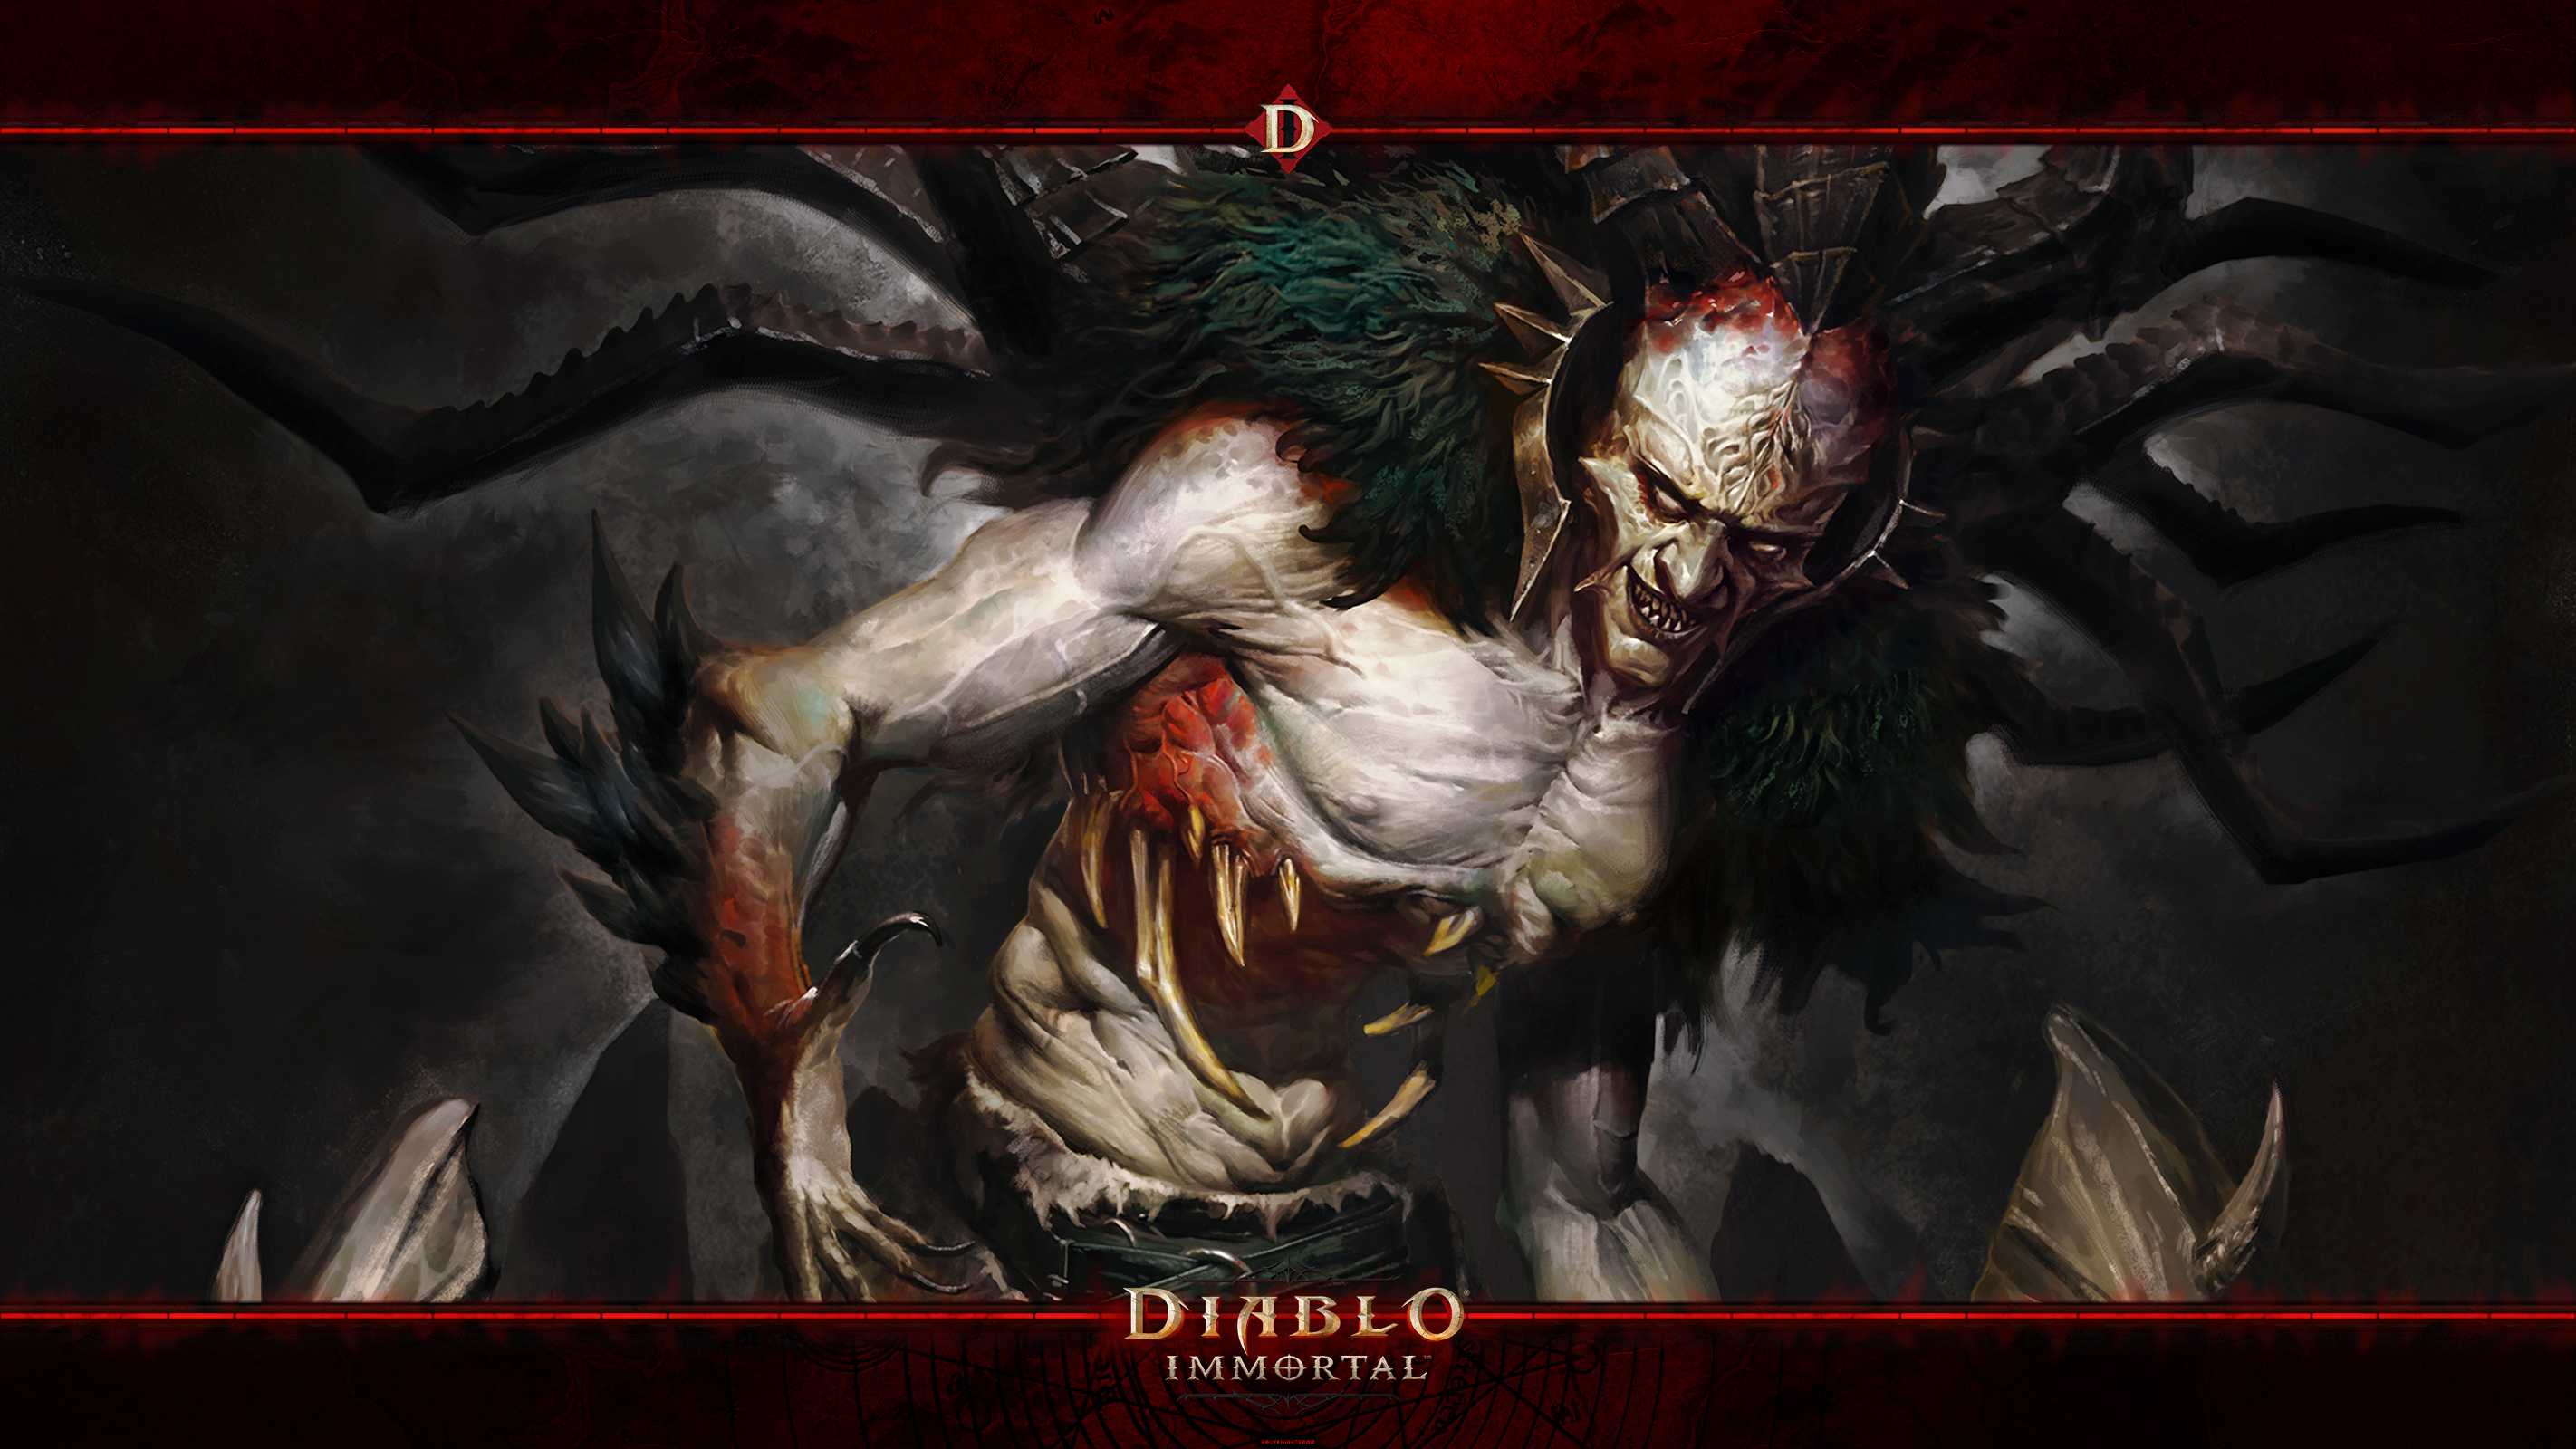 Diablo Immortal 2022 #2 - Baal